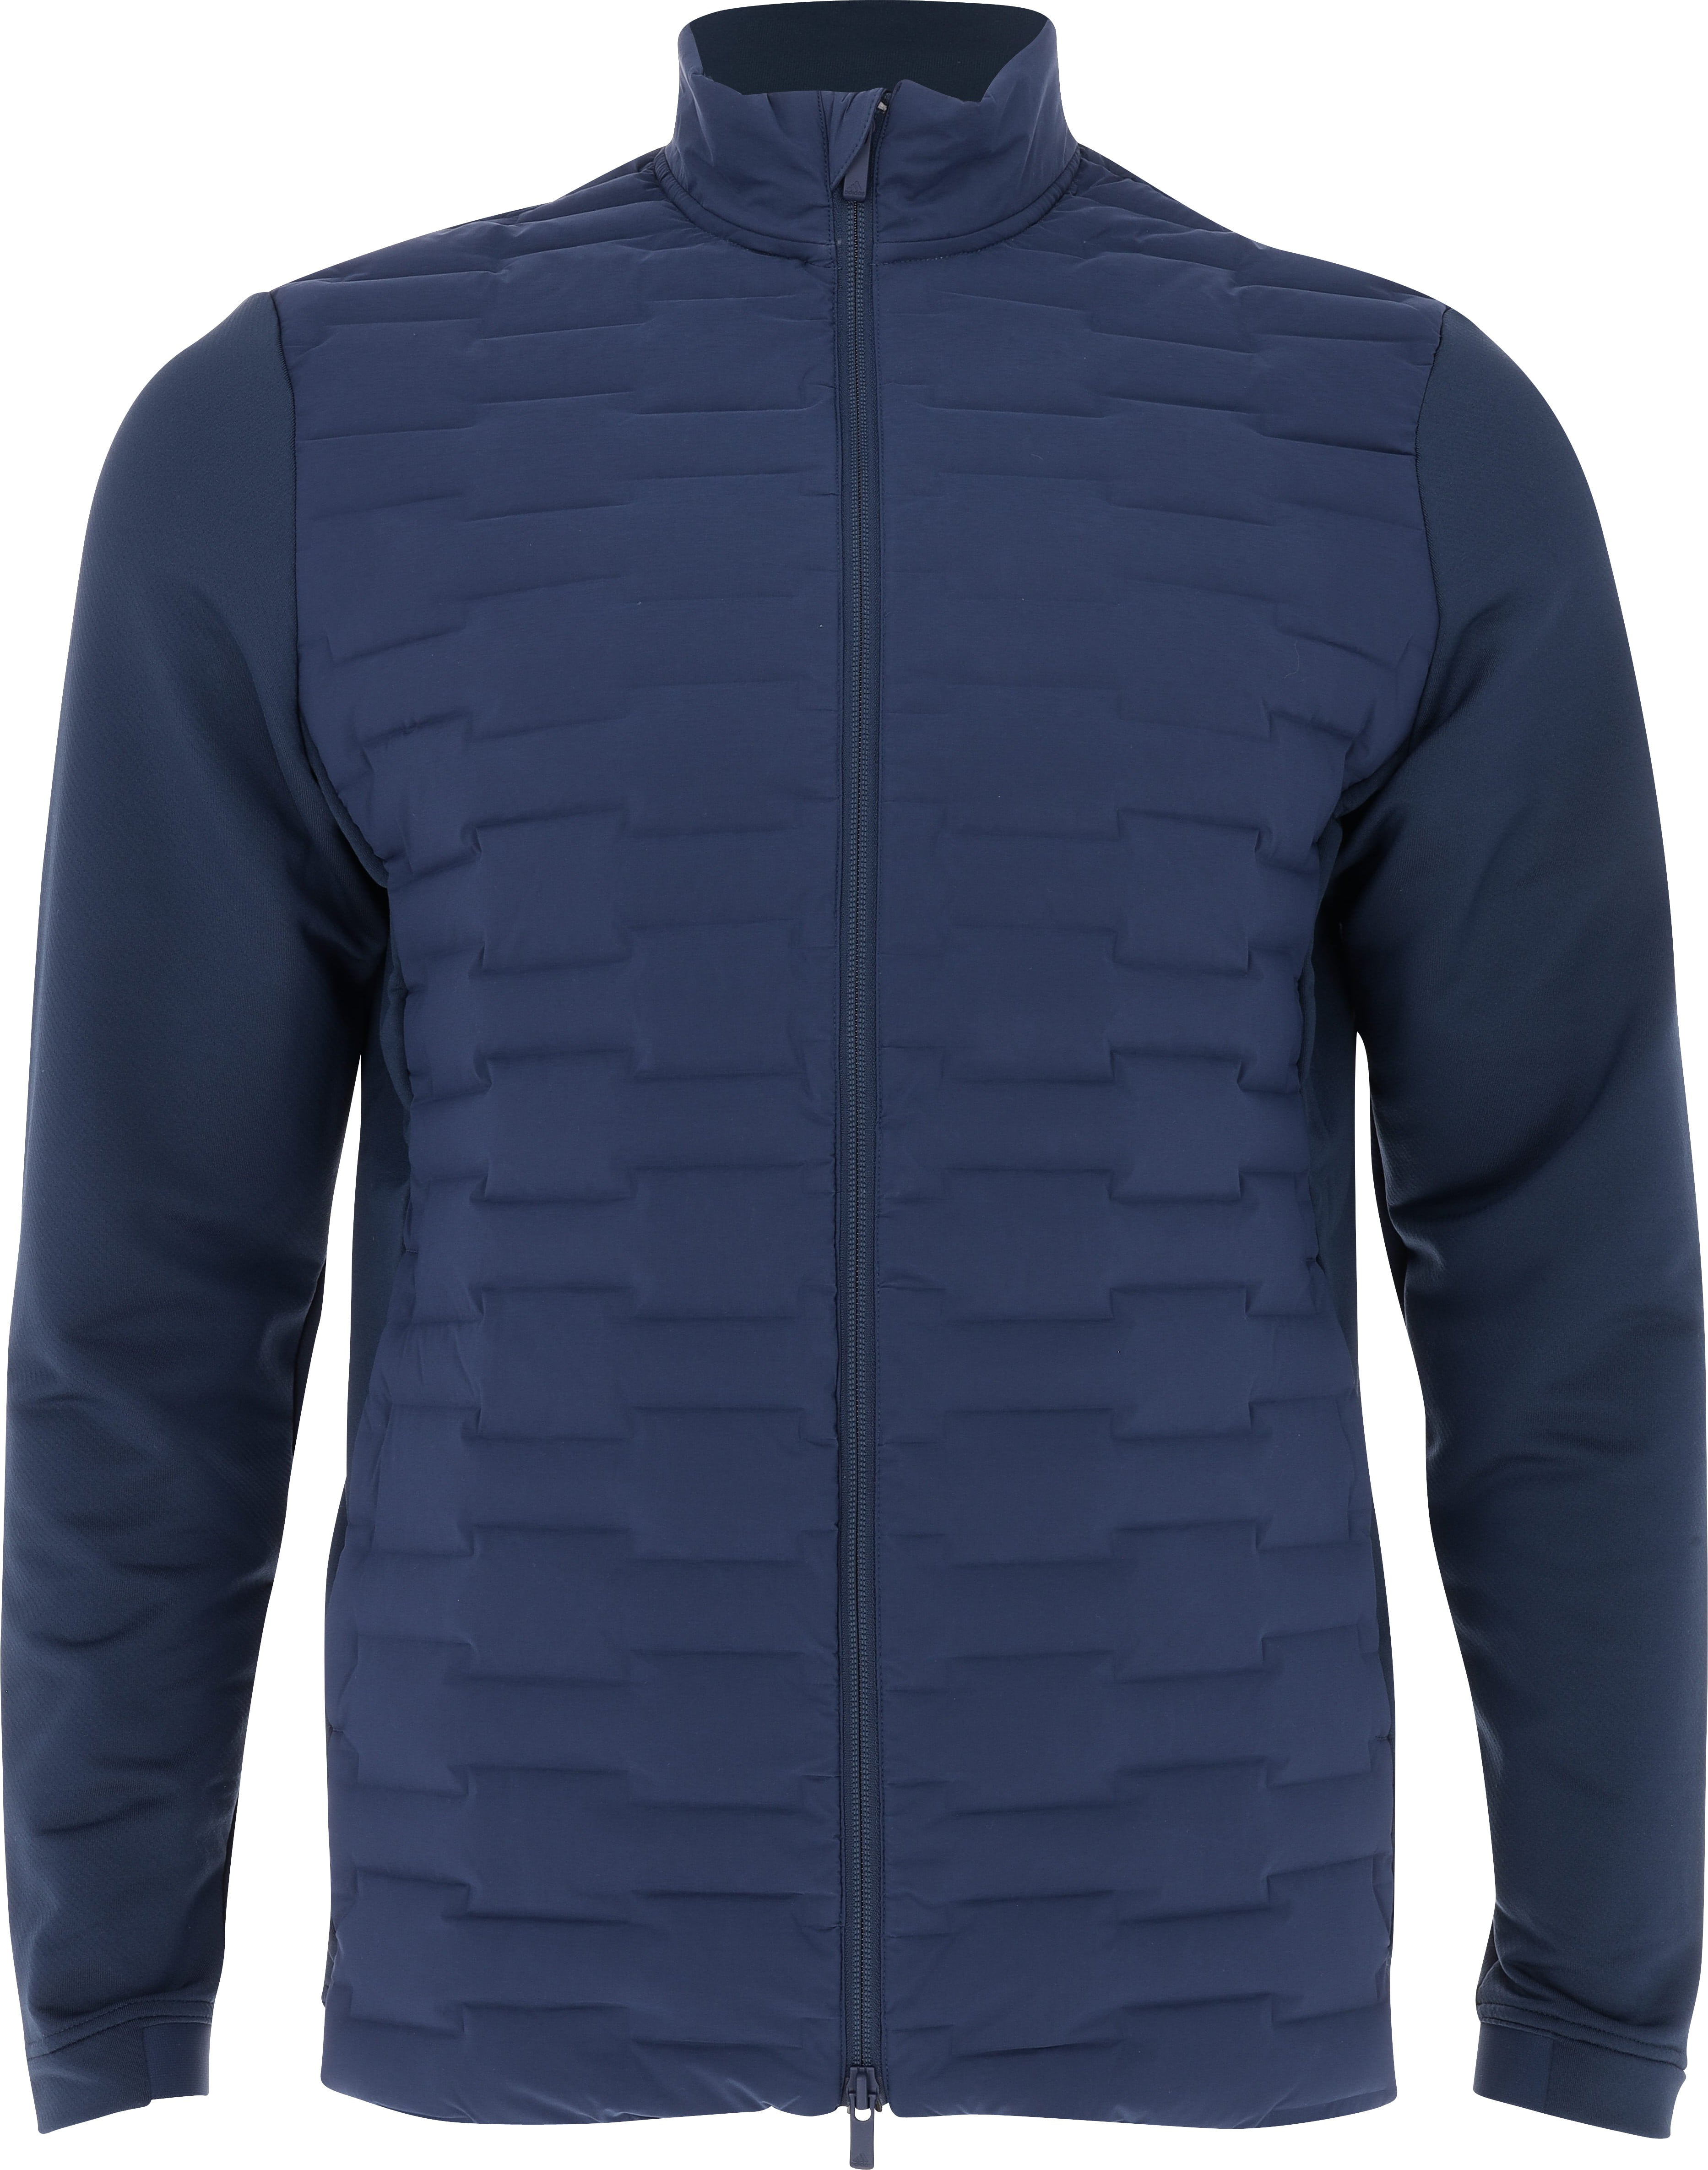 Adidas FrostGuard Insulated Full Zip Jacket Outerwear Men Choose Size ...